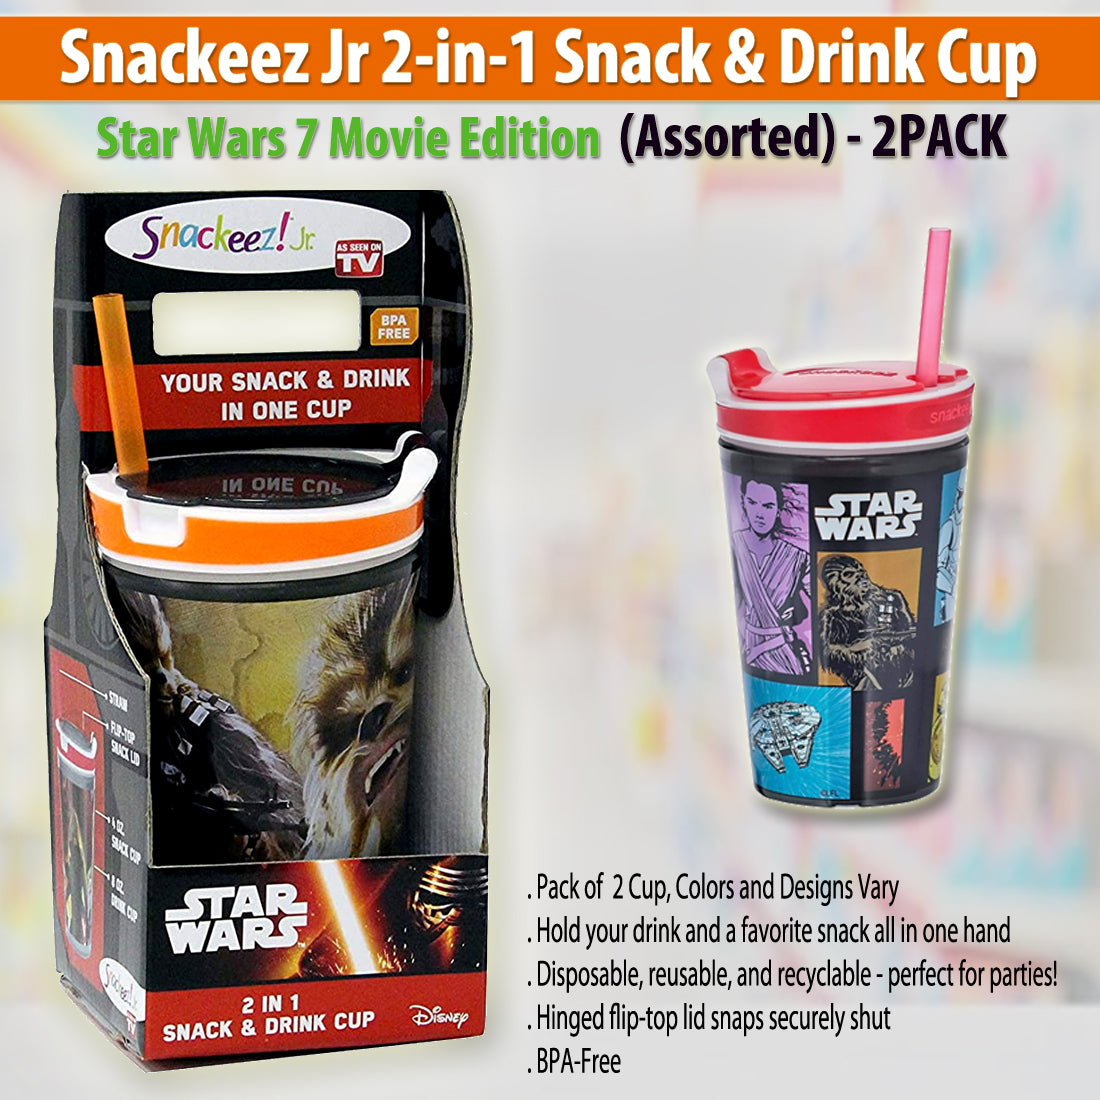 Snackeez Jr. Disney Frozen 2 in 1 Snack and Drink Cup Reviews